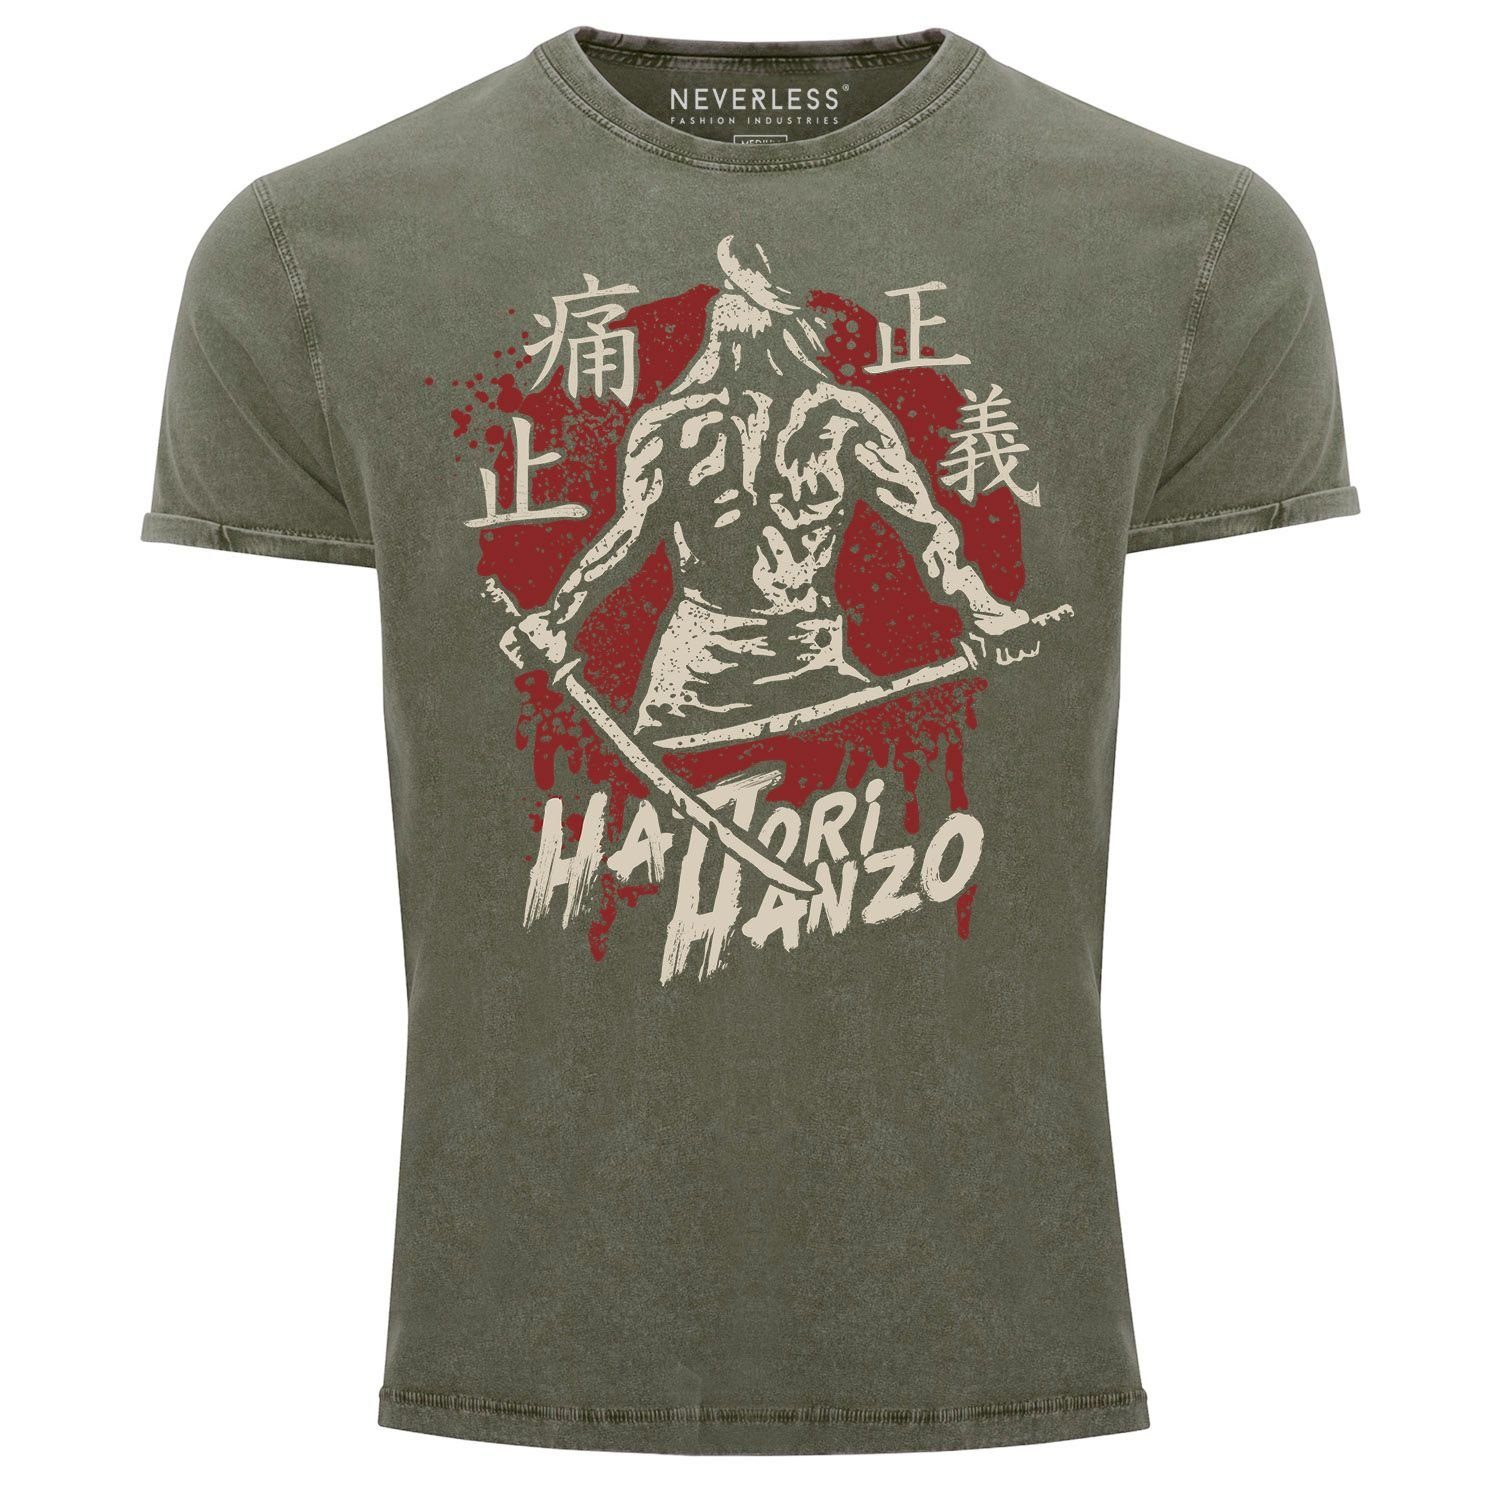 Neverless Print-Shirt Herren Vintage Shirt Samurai Schwert japanische Schriftzeichen Schriftzug Hattori Hanzo Used Look Neverless® mit Print oliv